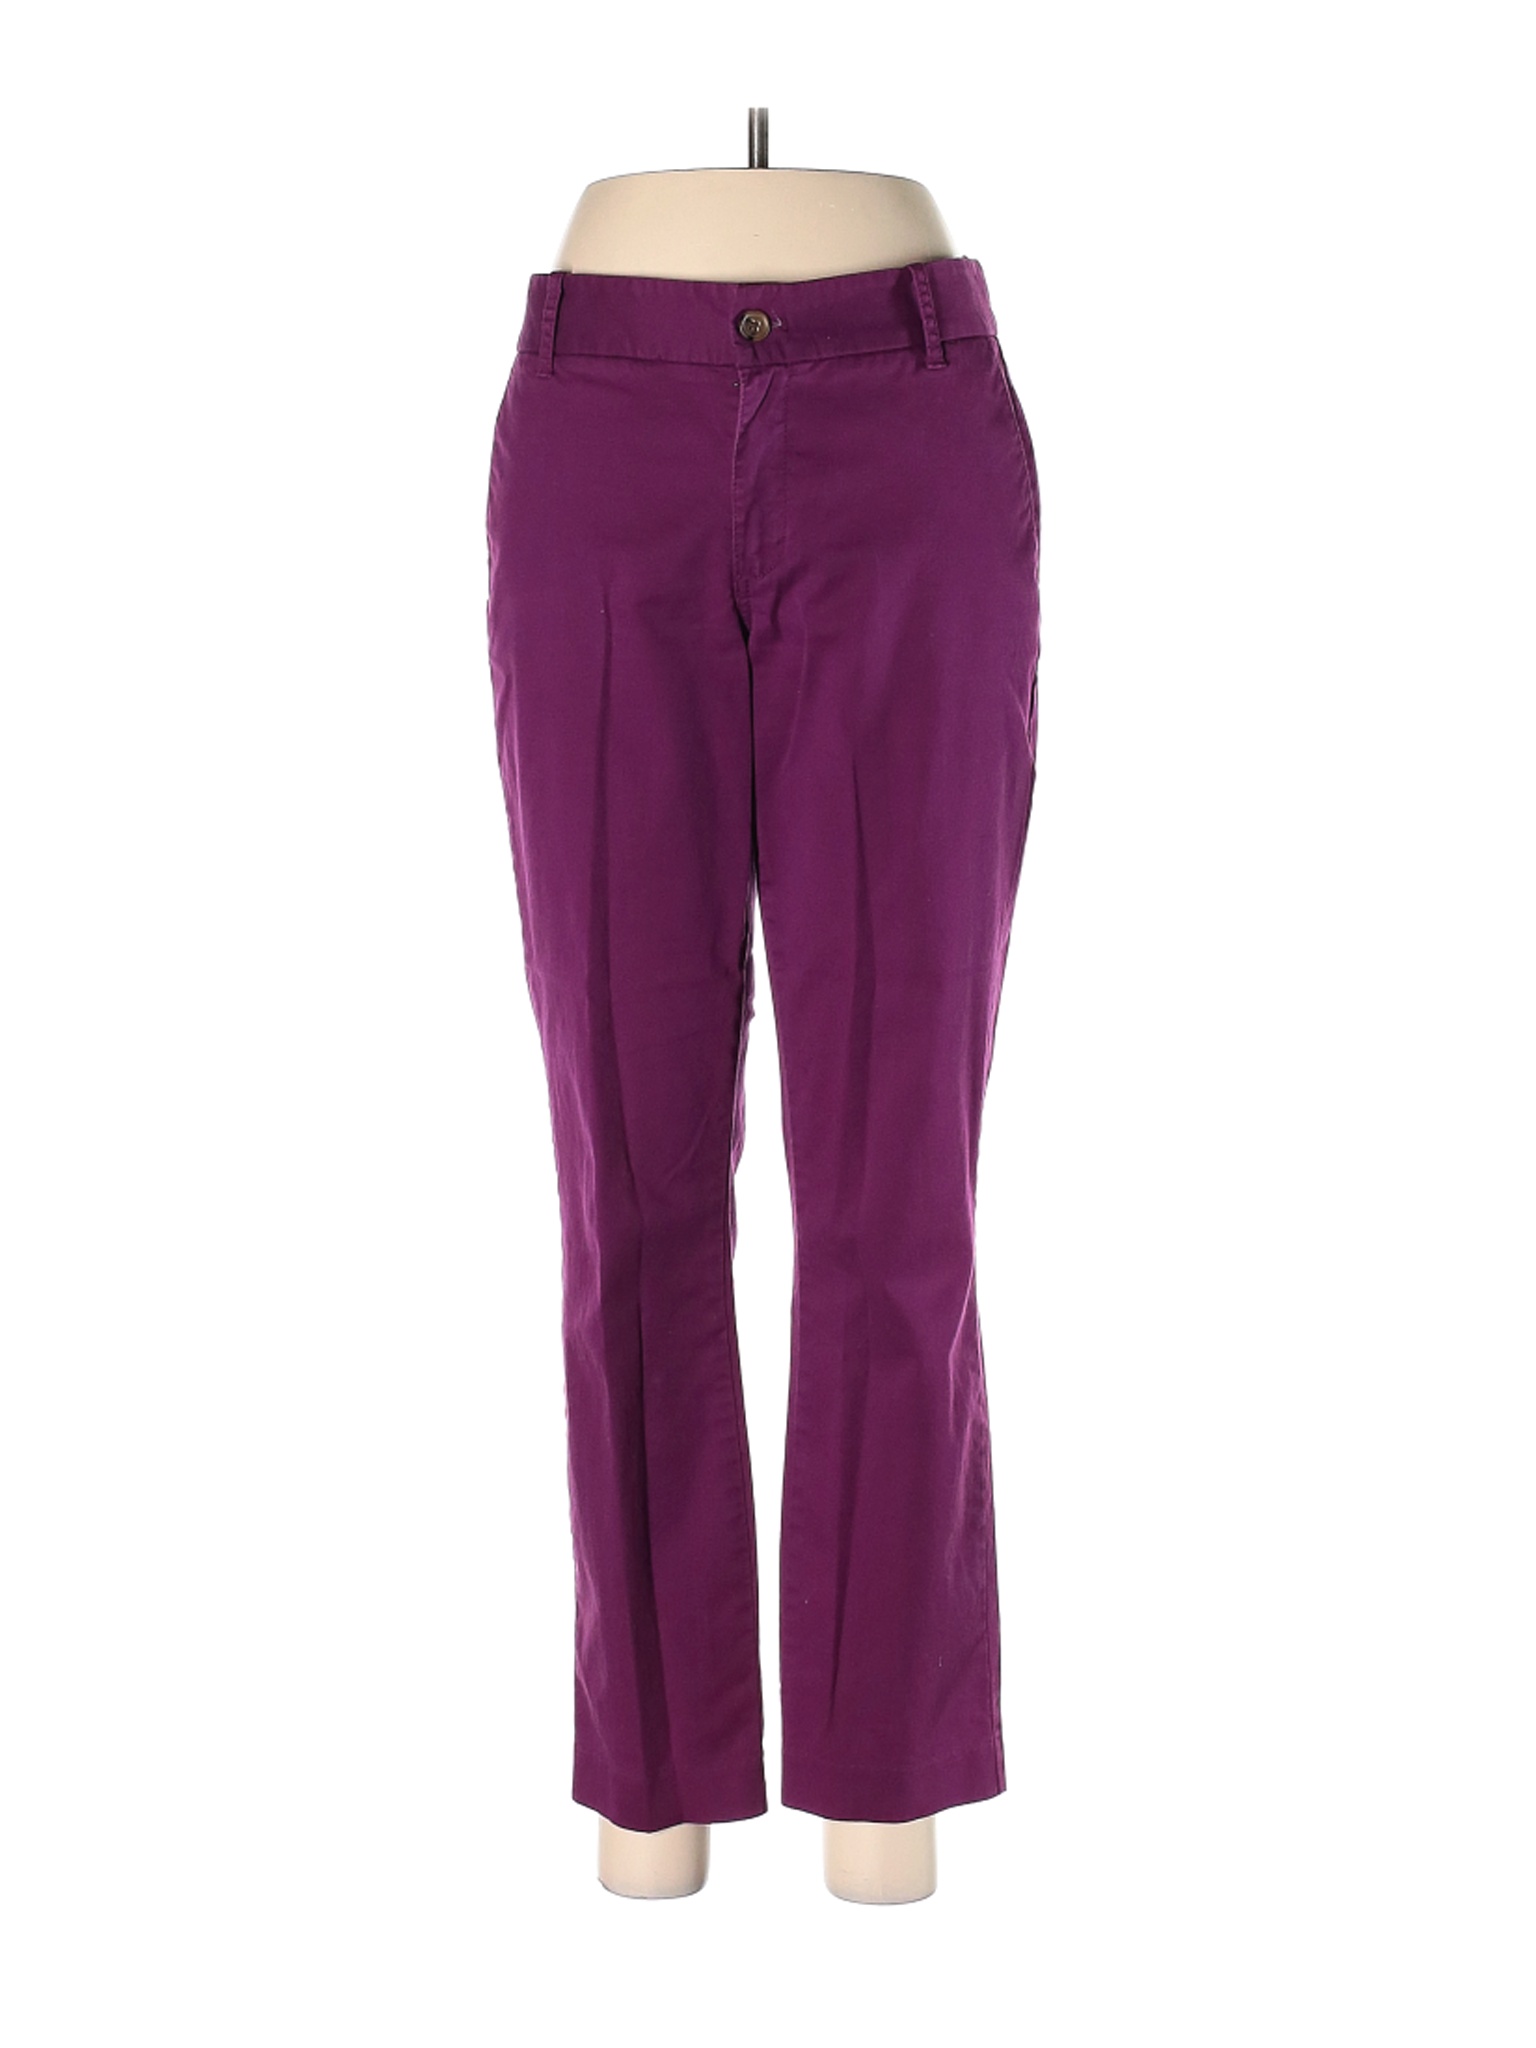 J.Crew Factory Store Women Purple Khakis 8 | eBay